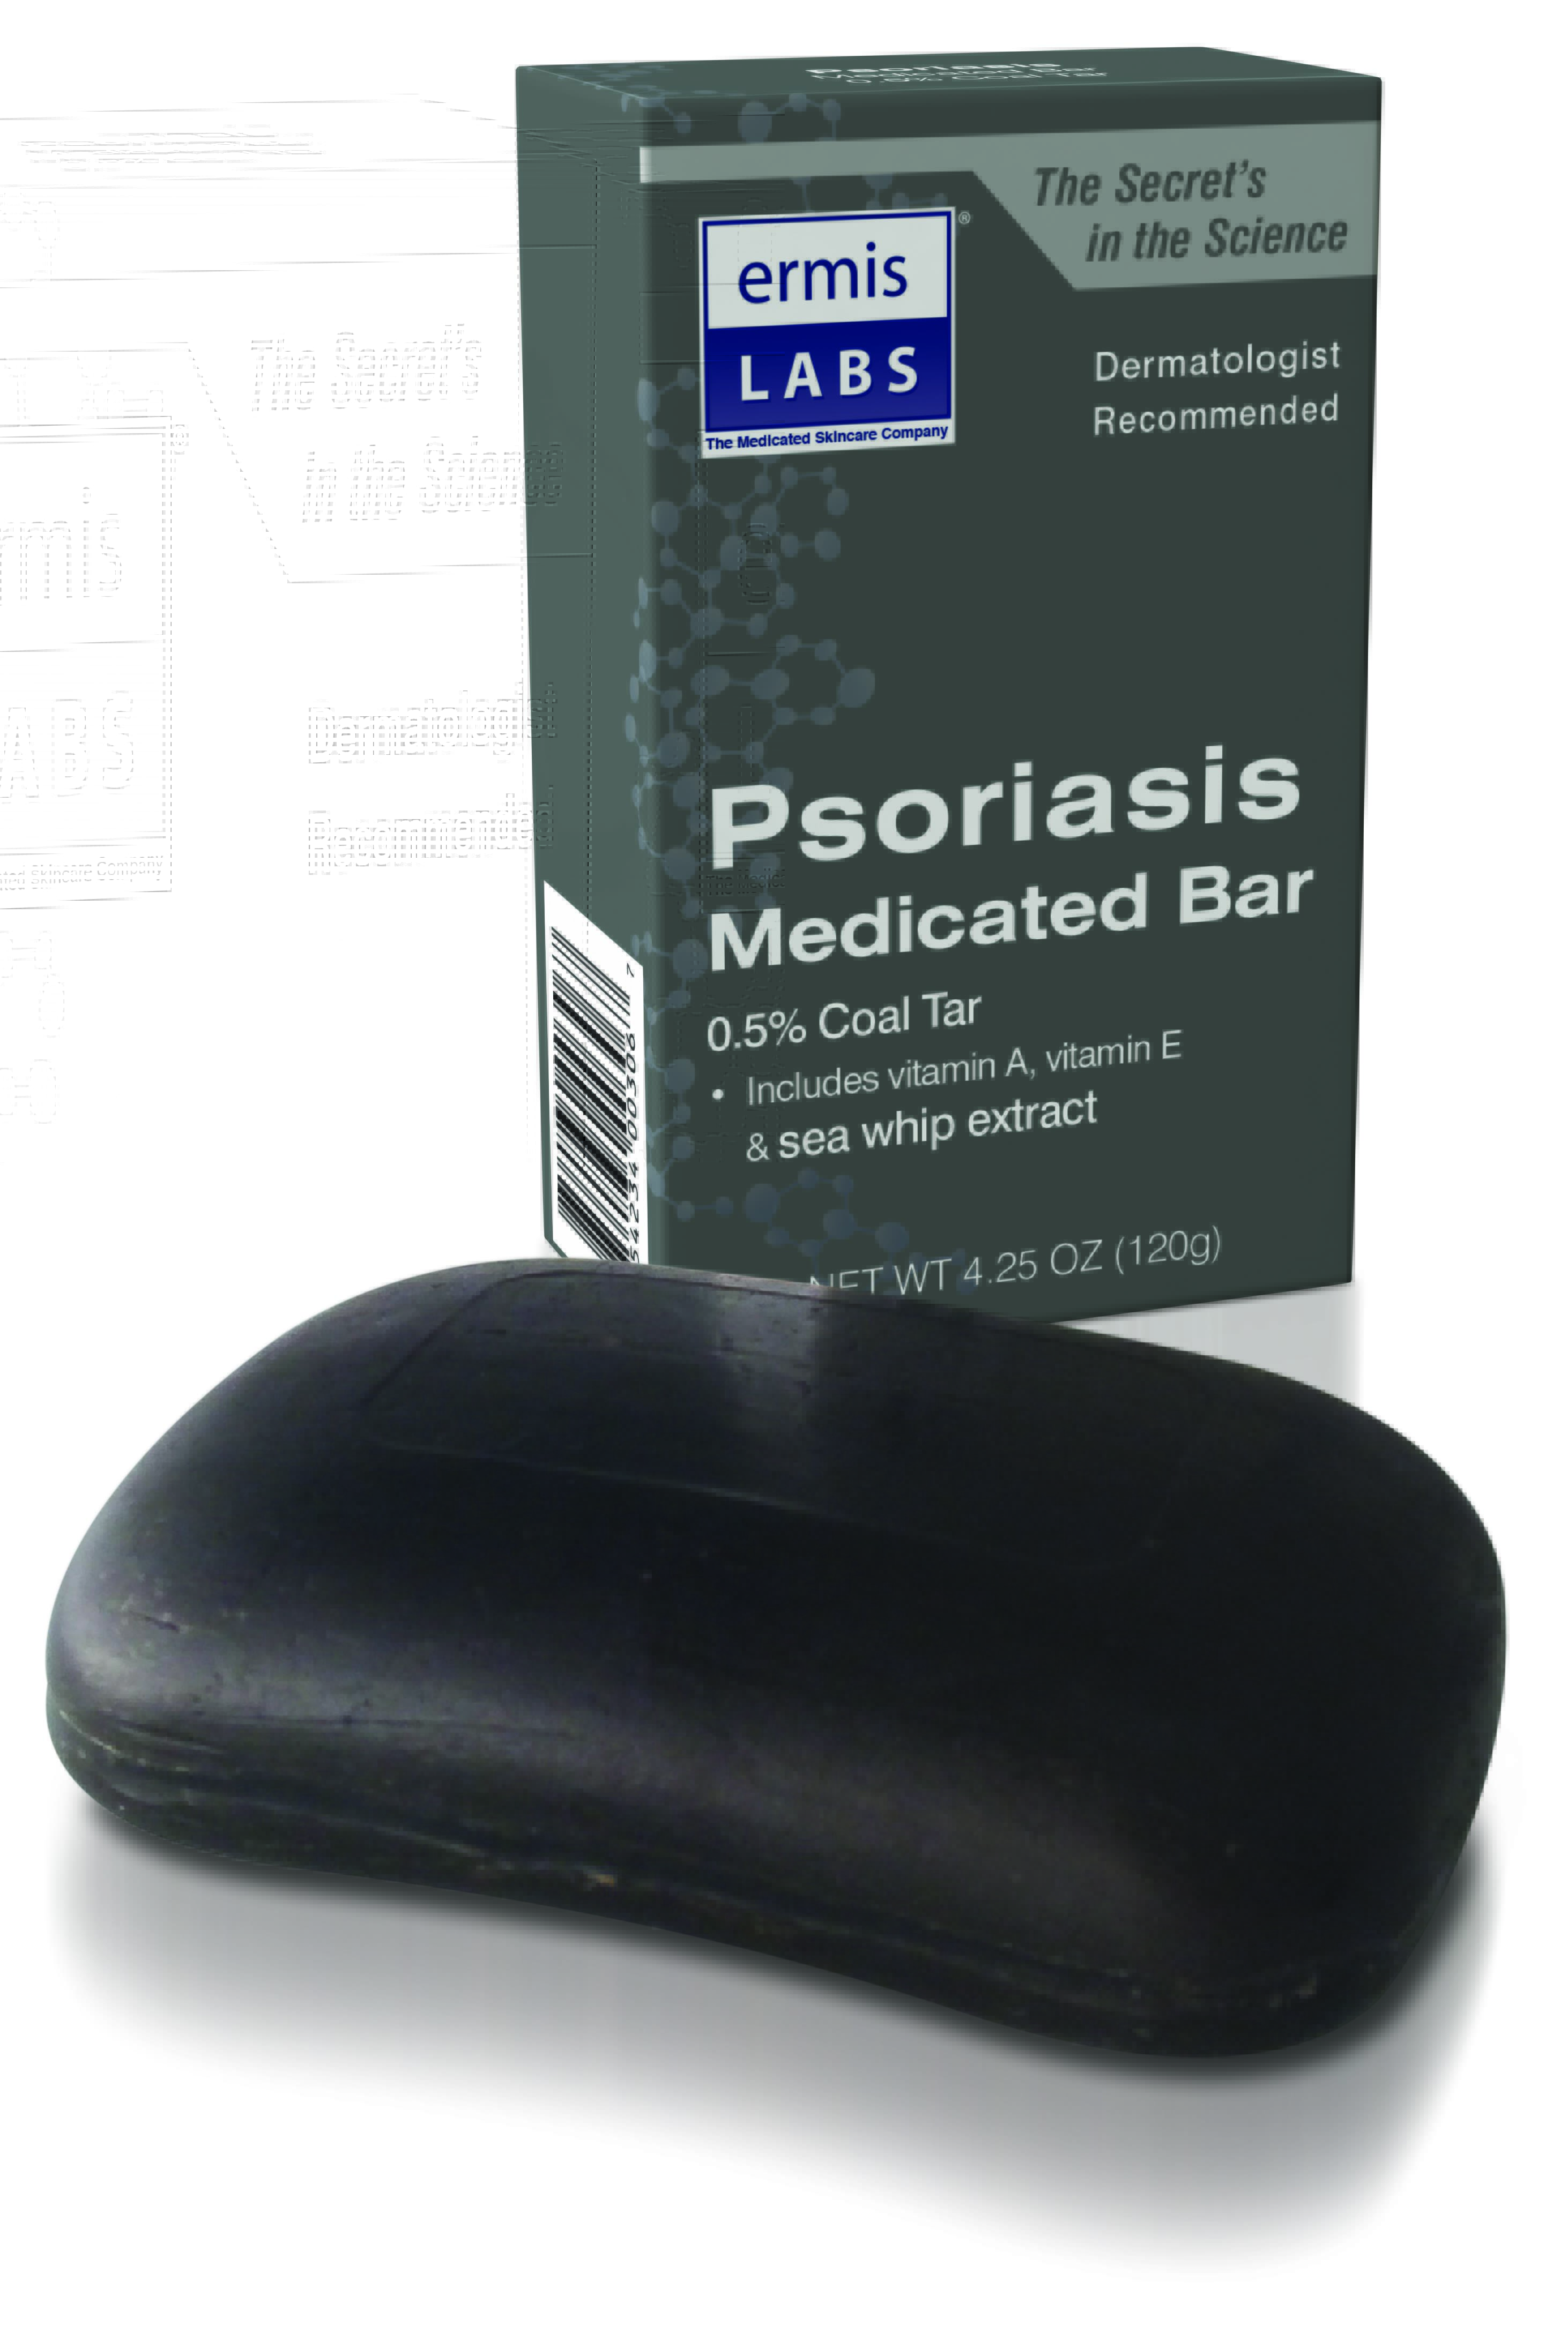 tar coal soap treatment medicated ermis sulfur labs bars skincare announces launch llc five prweb